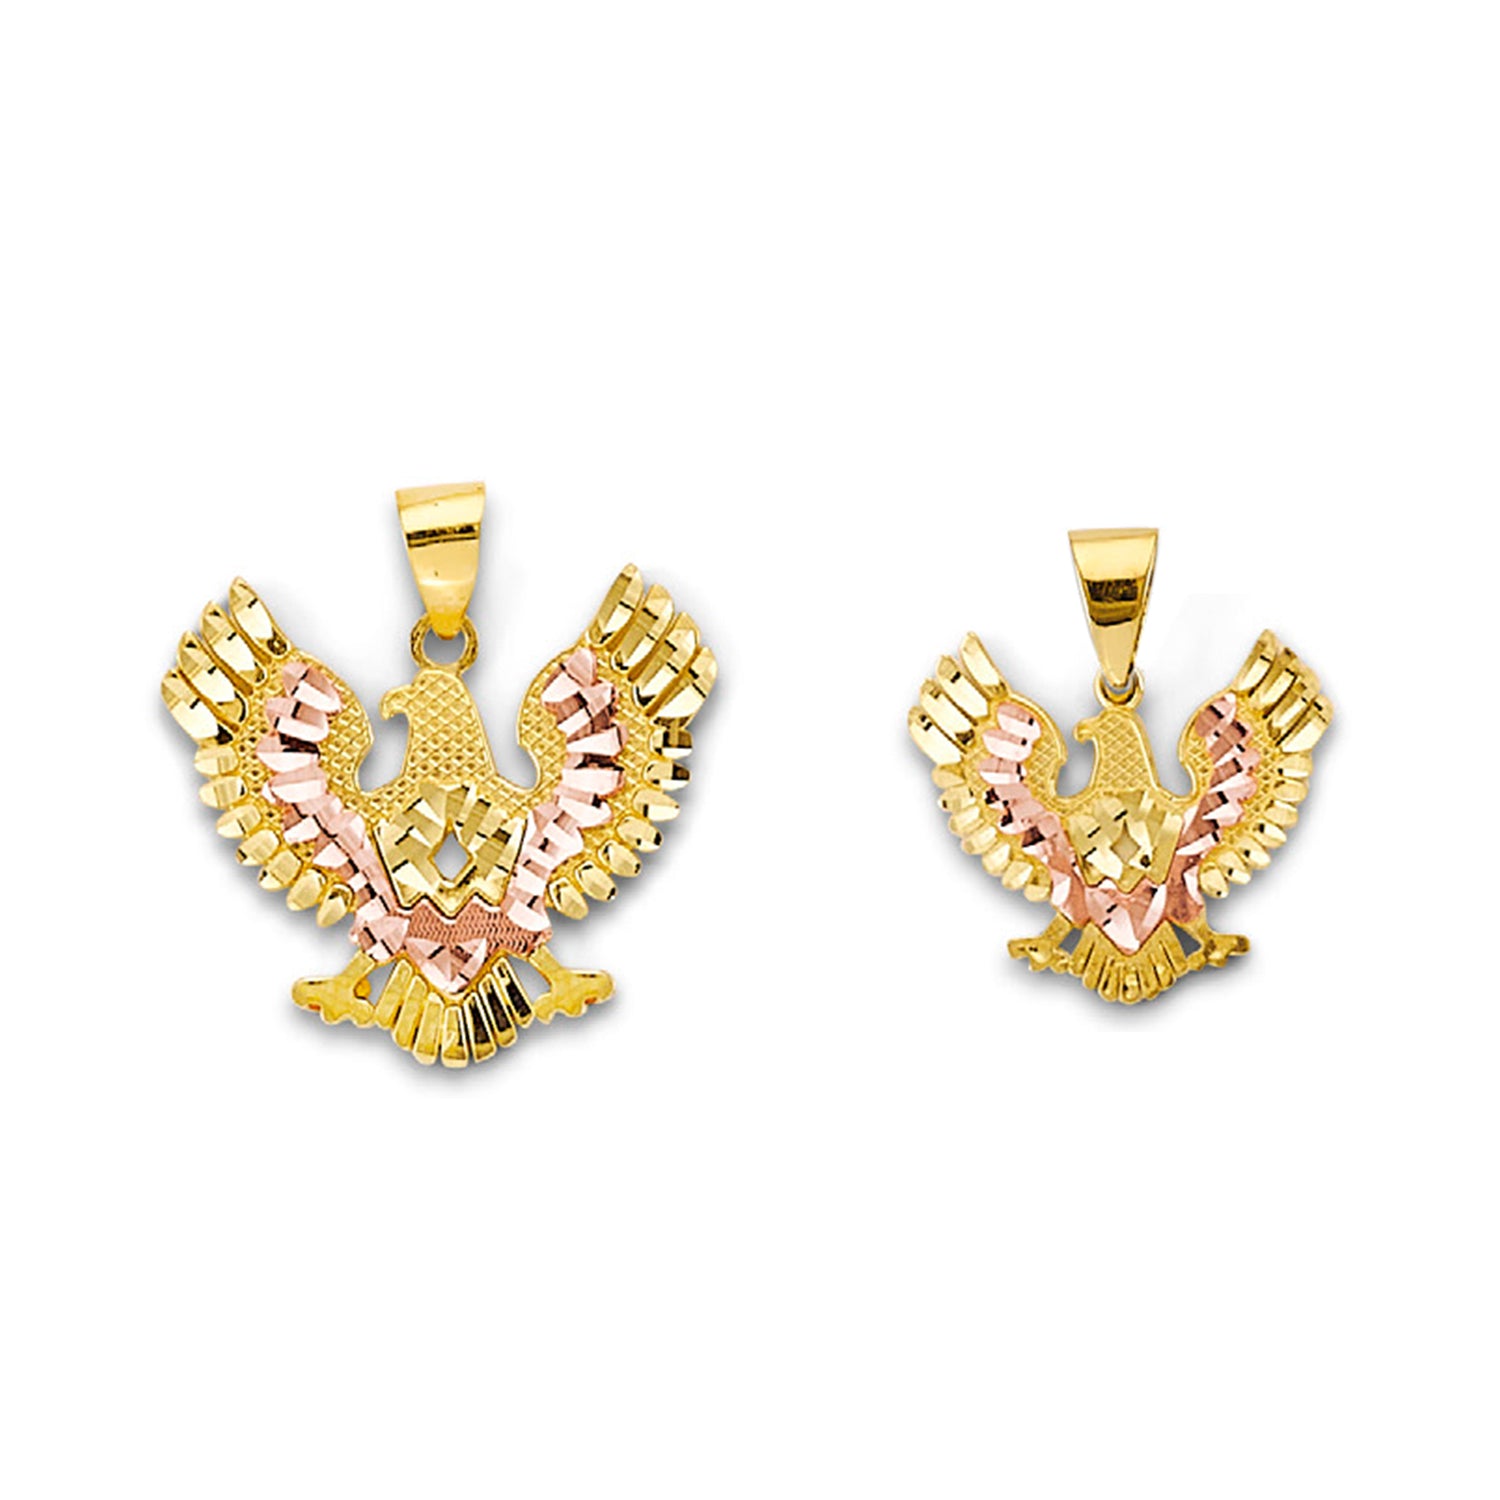 Two Tone Gold Mesmerizing Eagle Charm Pendant